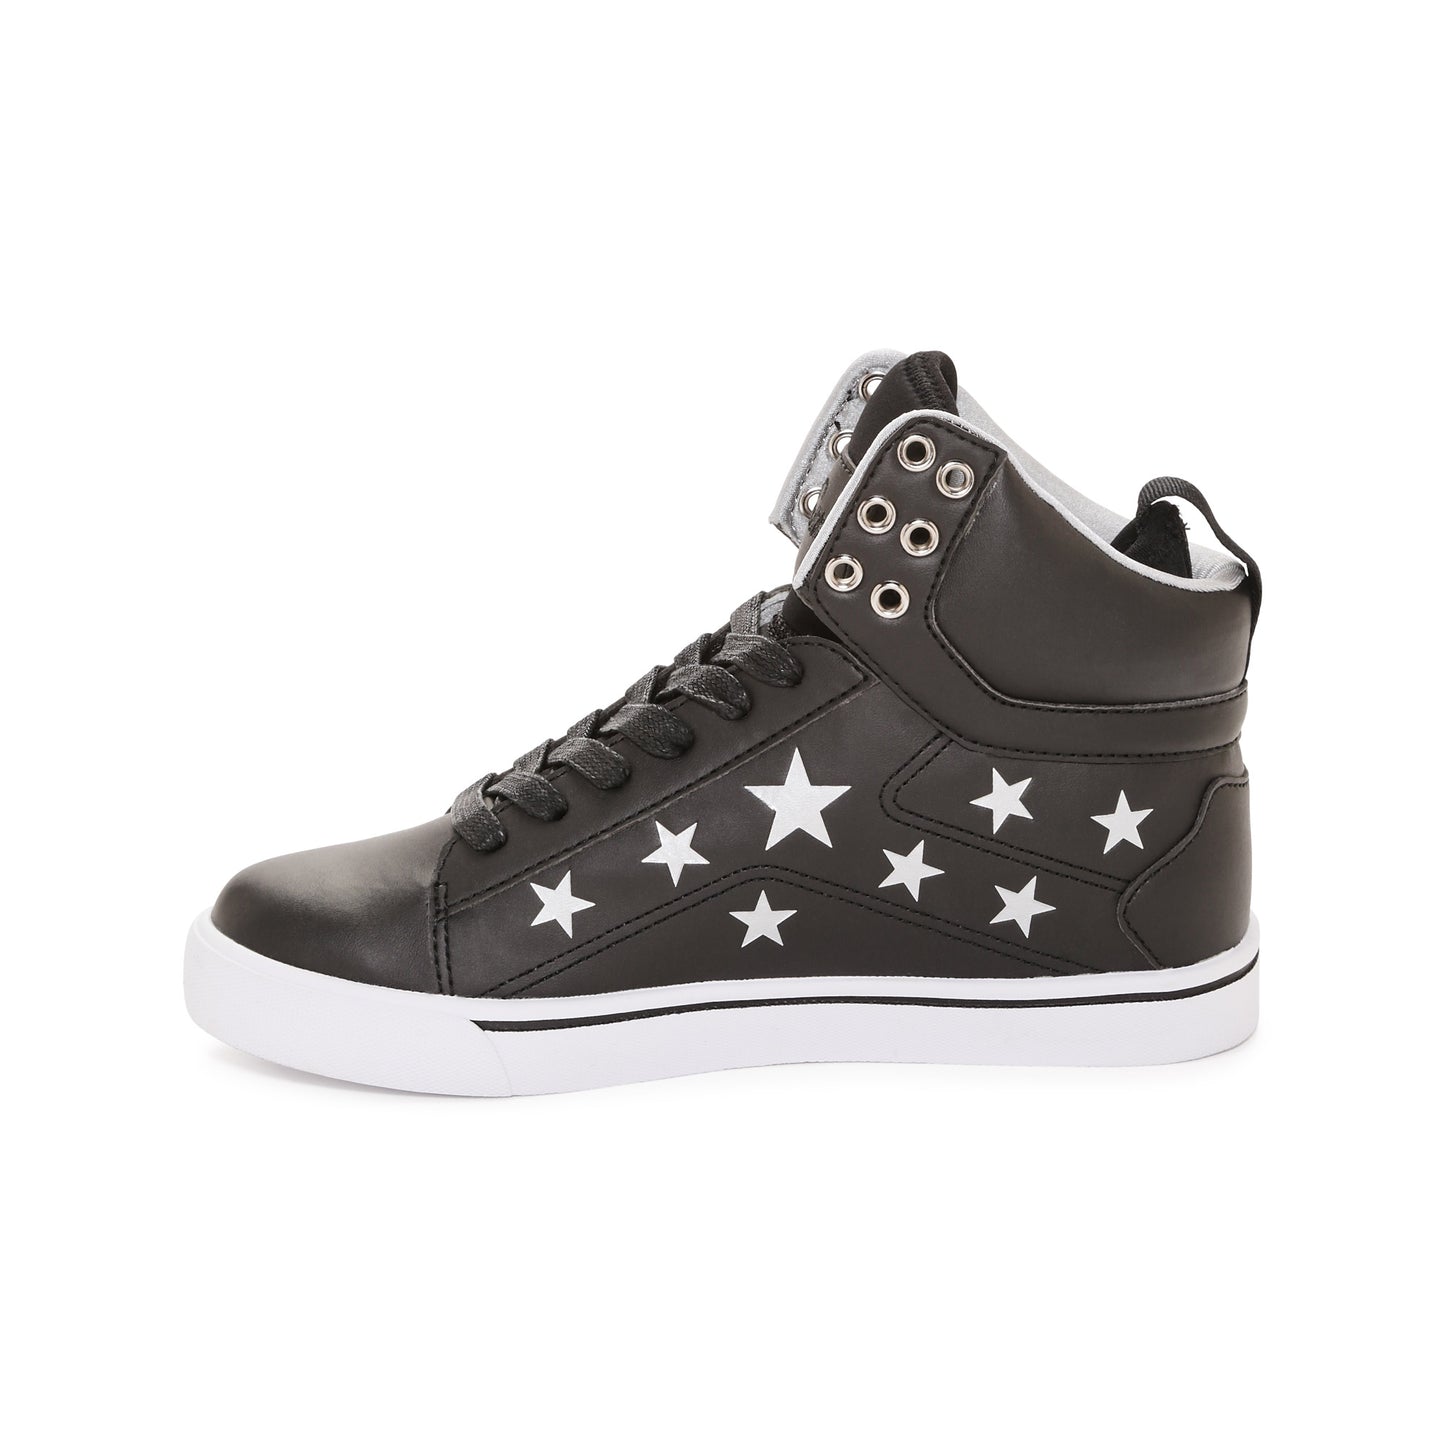 Pastry Pop Tart Star Youth Sneaker in Black/Silver median view